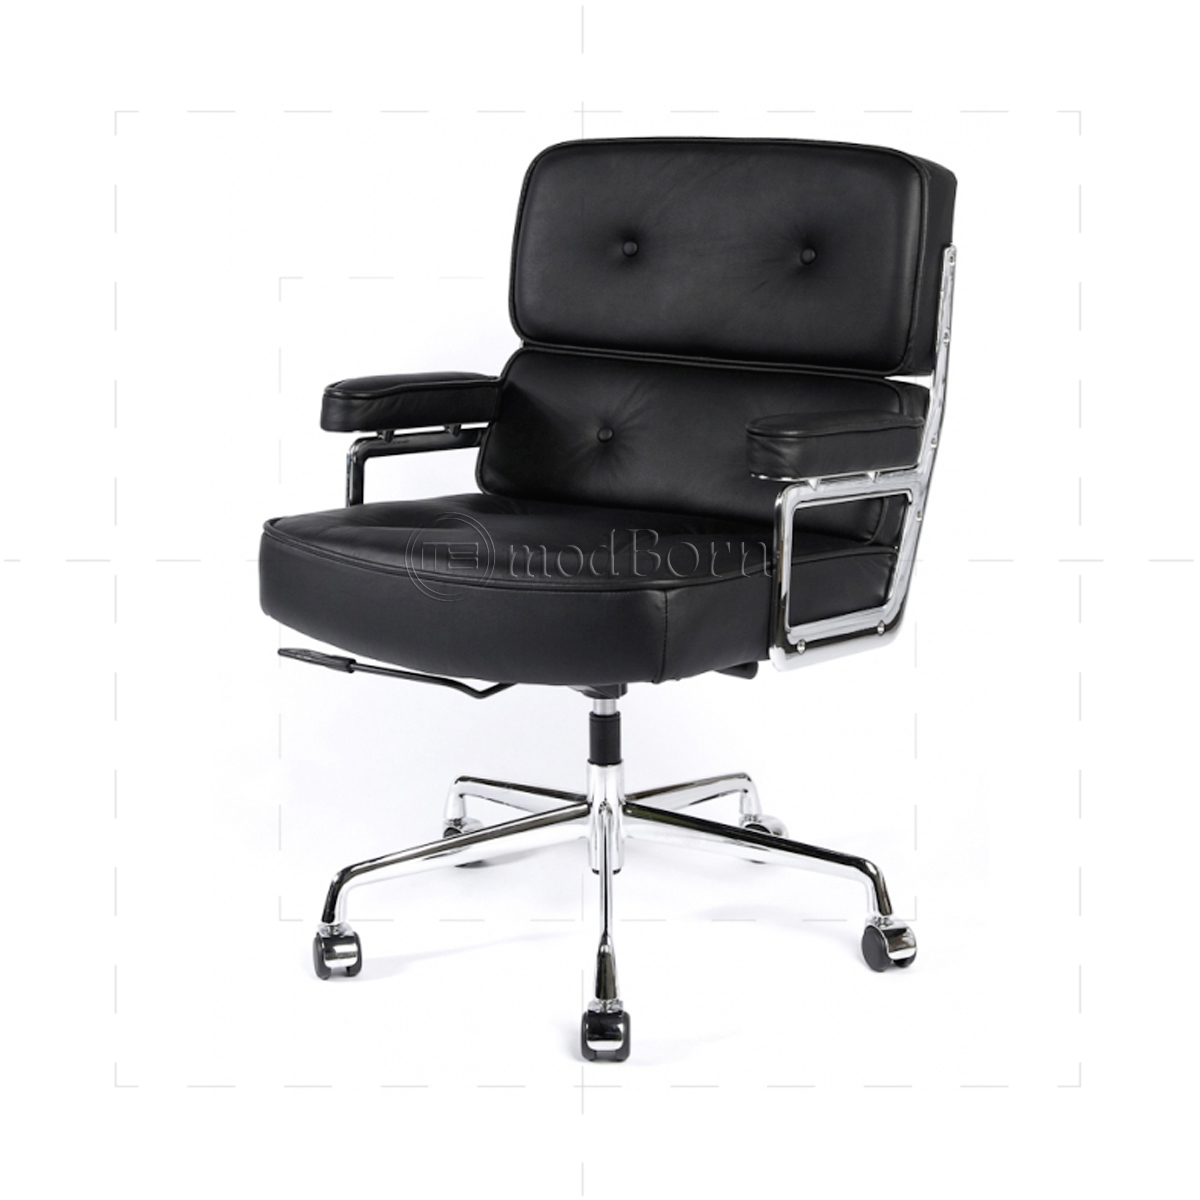 Charles Eames Es104 Office Chair 3 1200x1200 